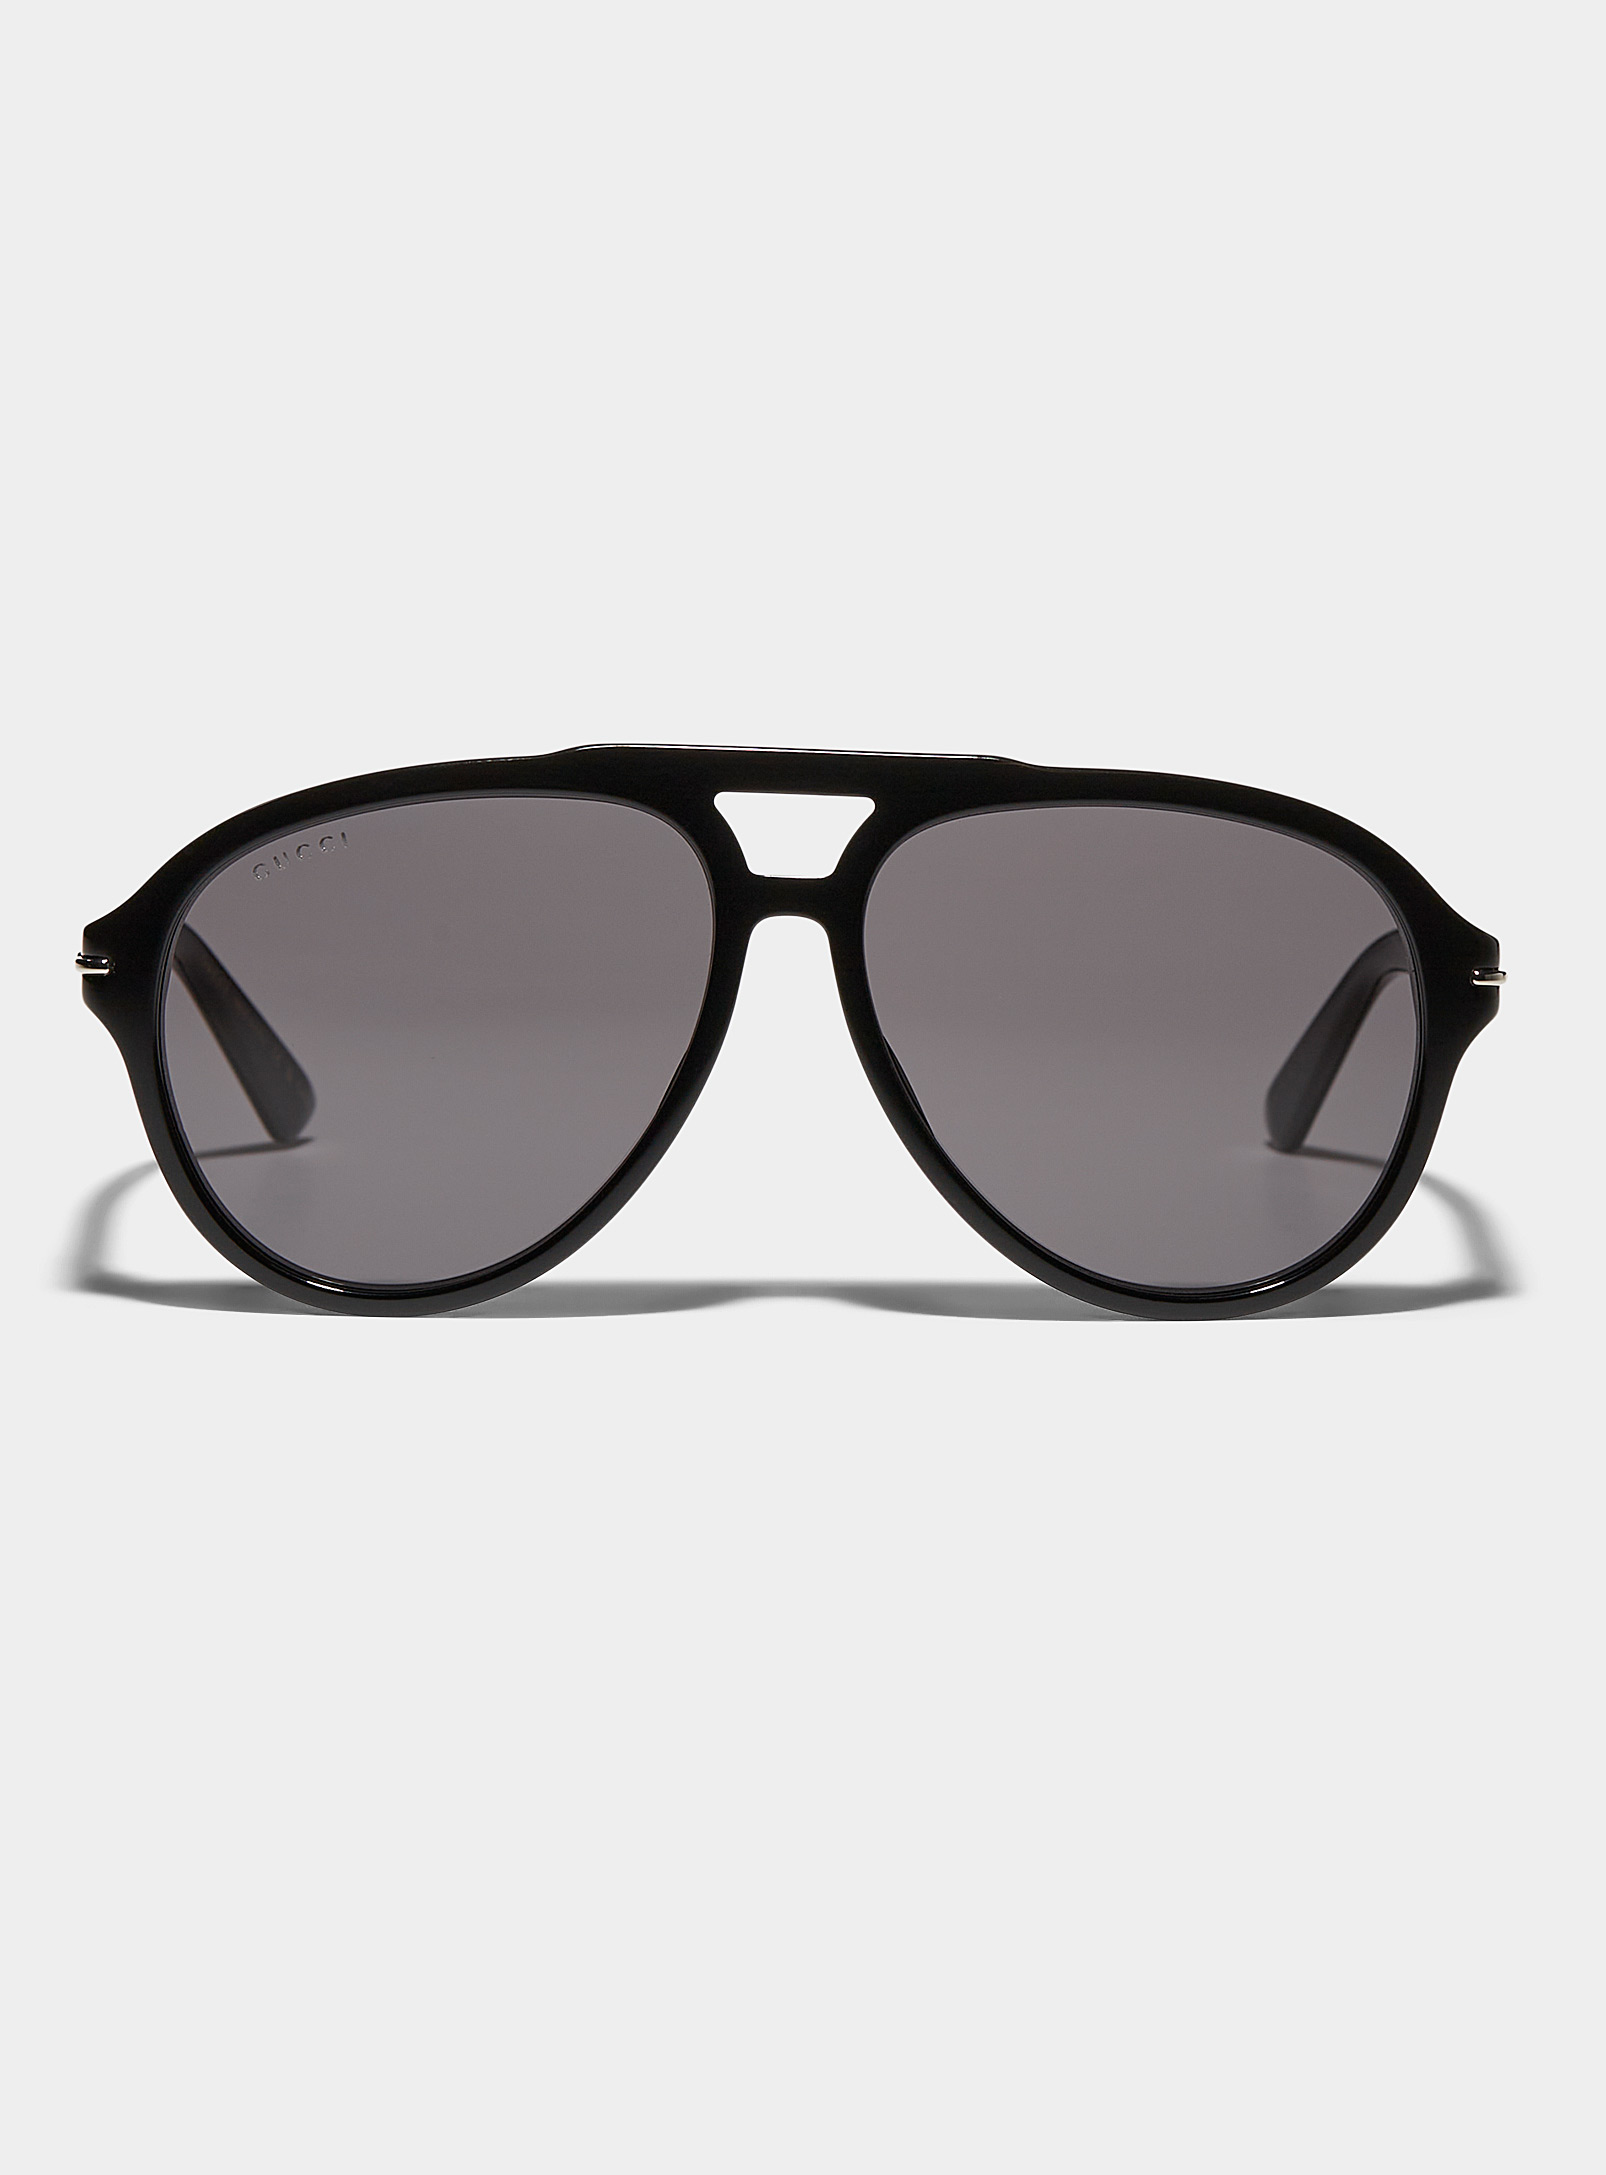 Gucci - Magnified navigator sunglasses